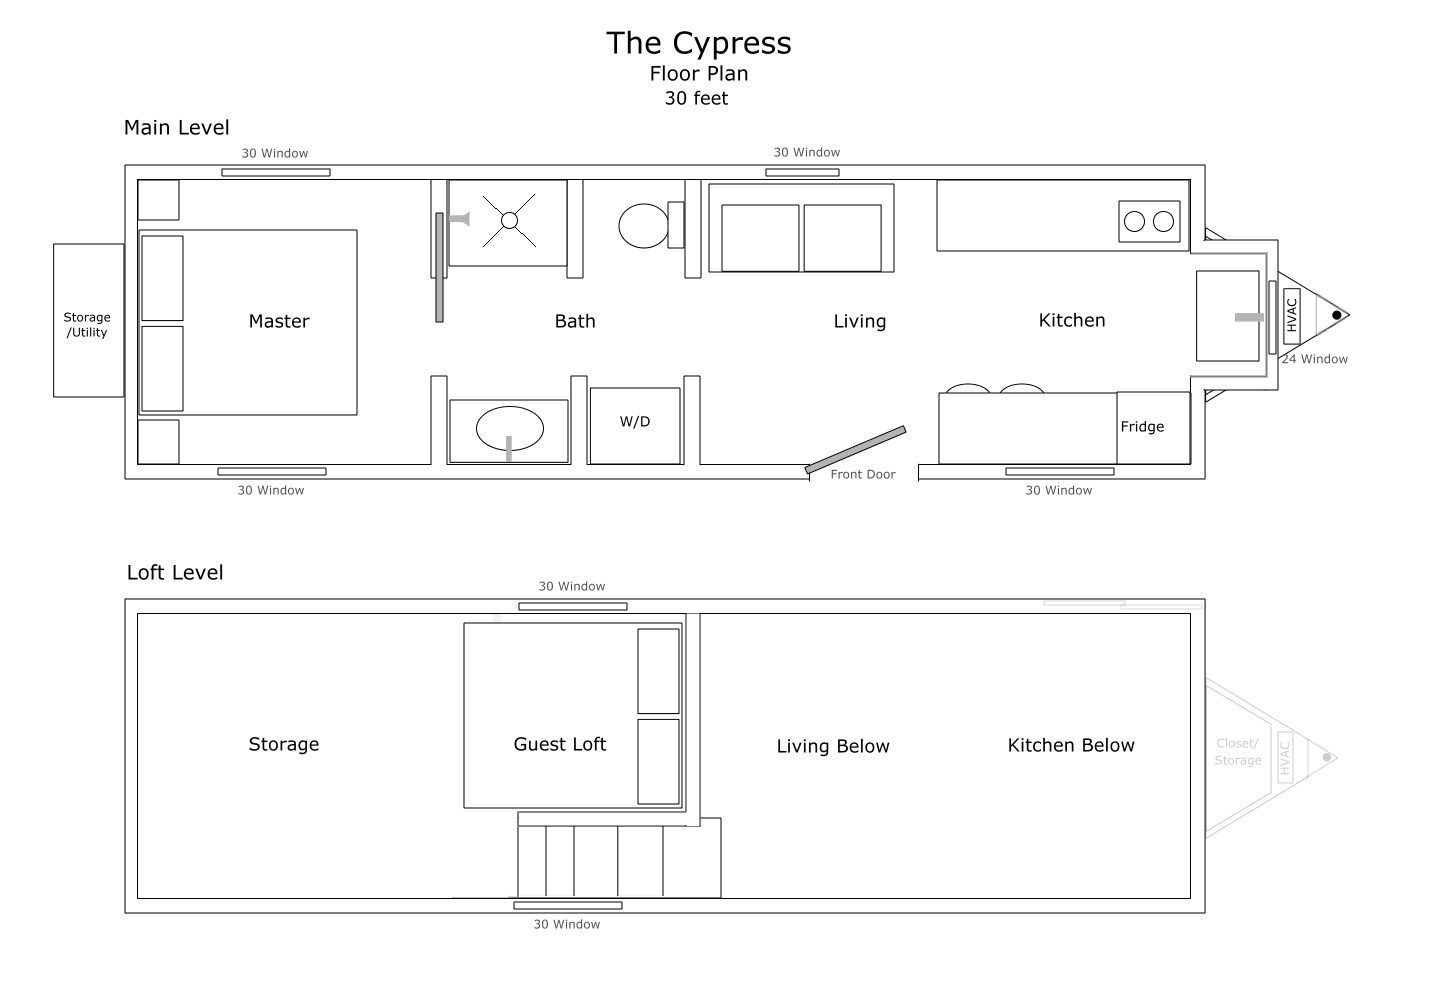 The Everest Tiny House Floor Plan